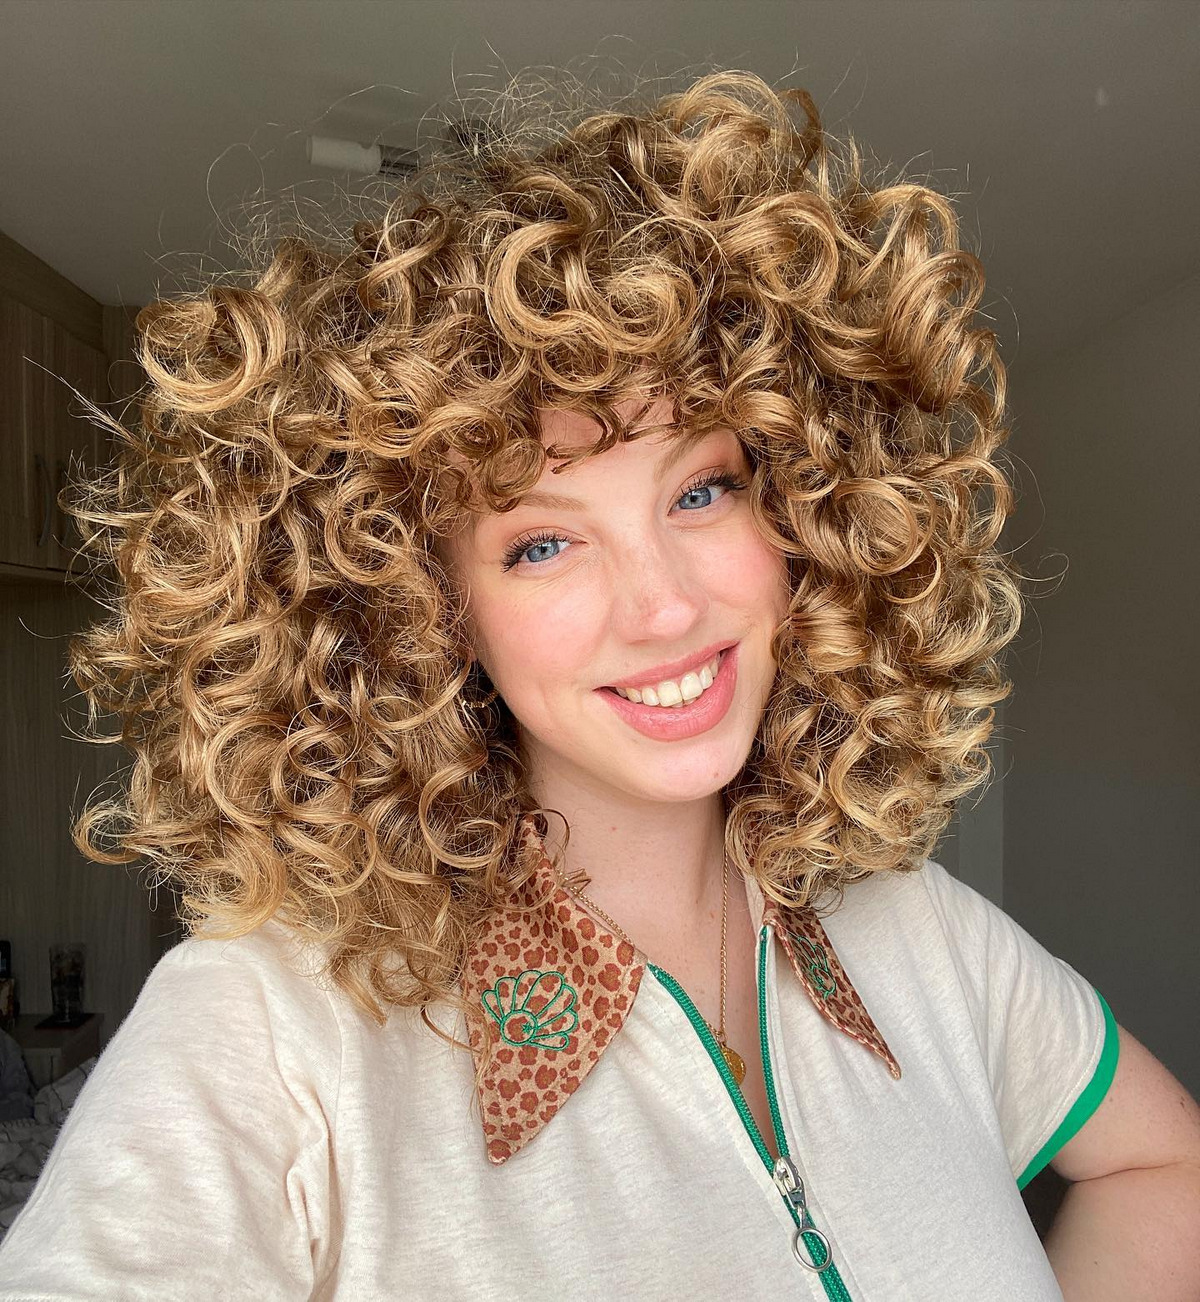 Curly Blonde Hair Girl 